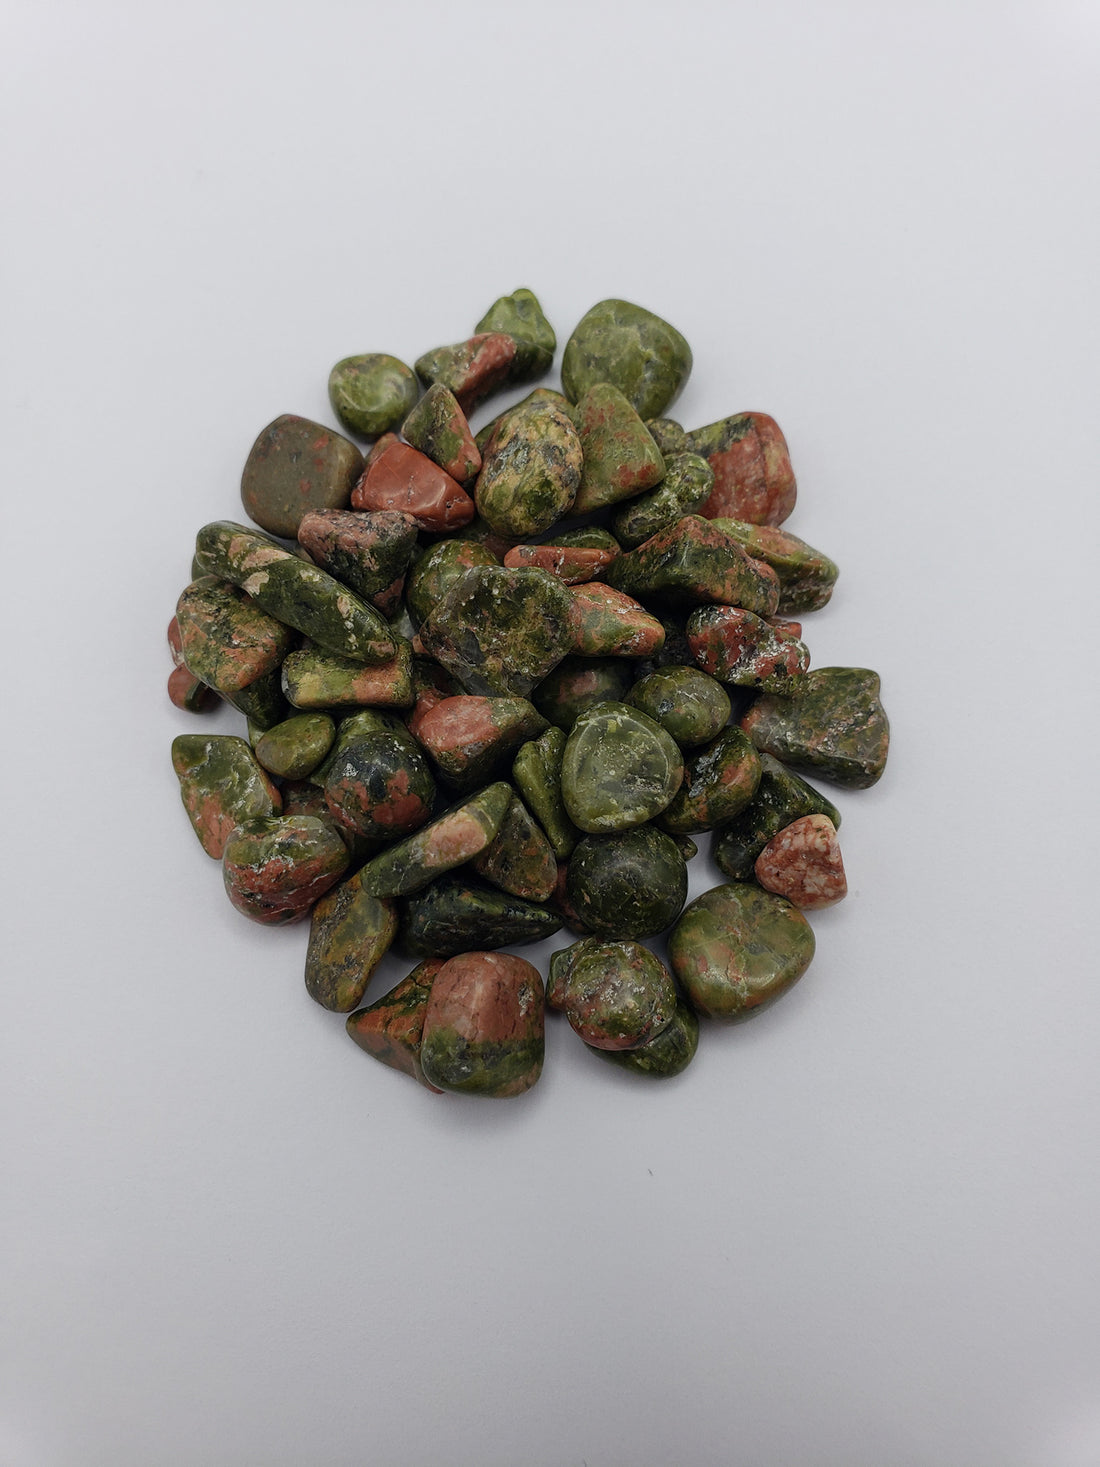 Tumbled Green Jasper (1oz = approximately 2 stones) – Cowboy and